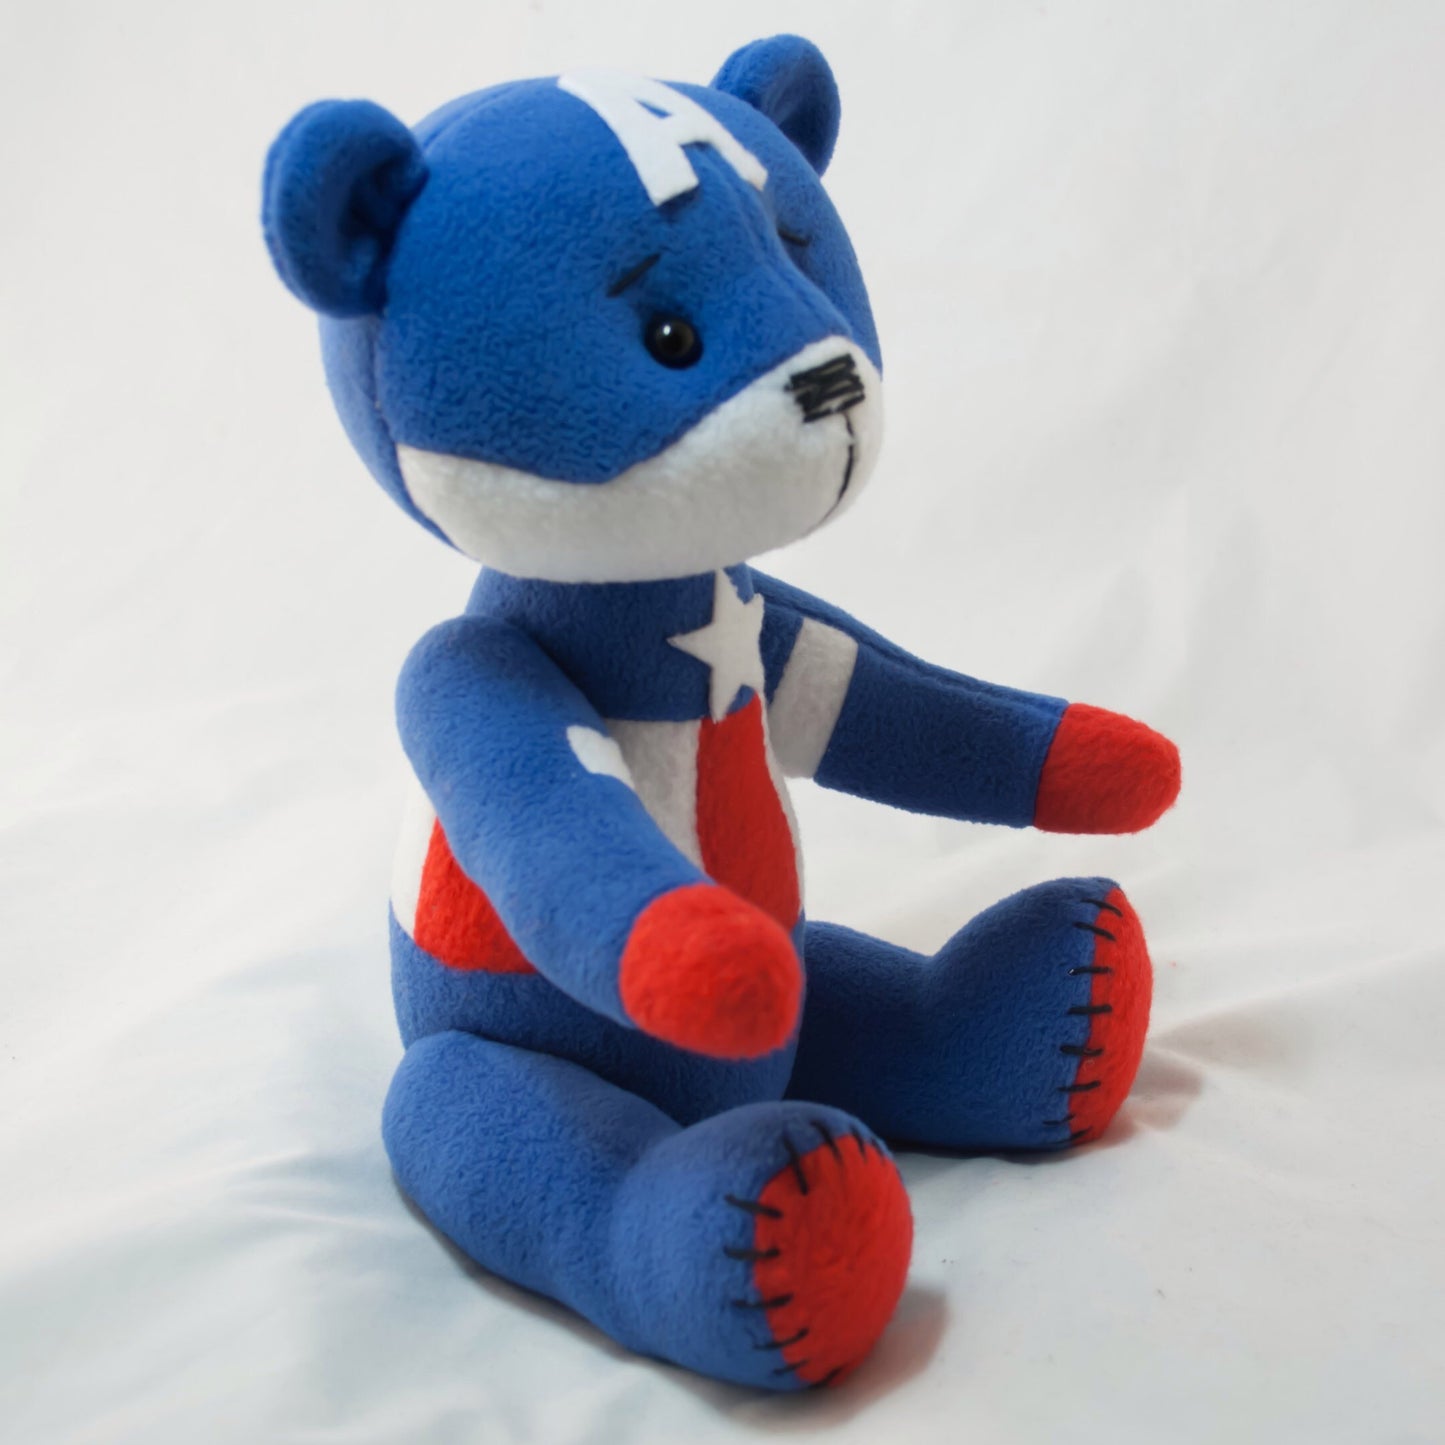 Captain America Super Teddy